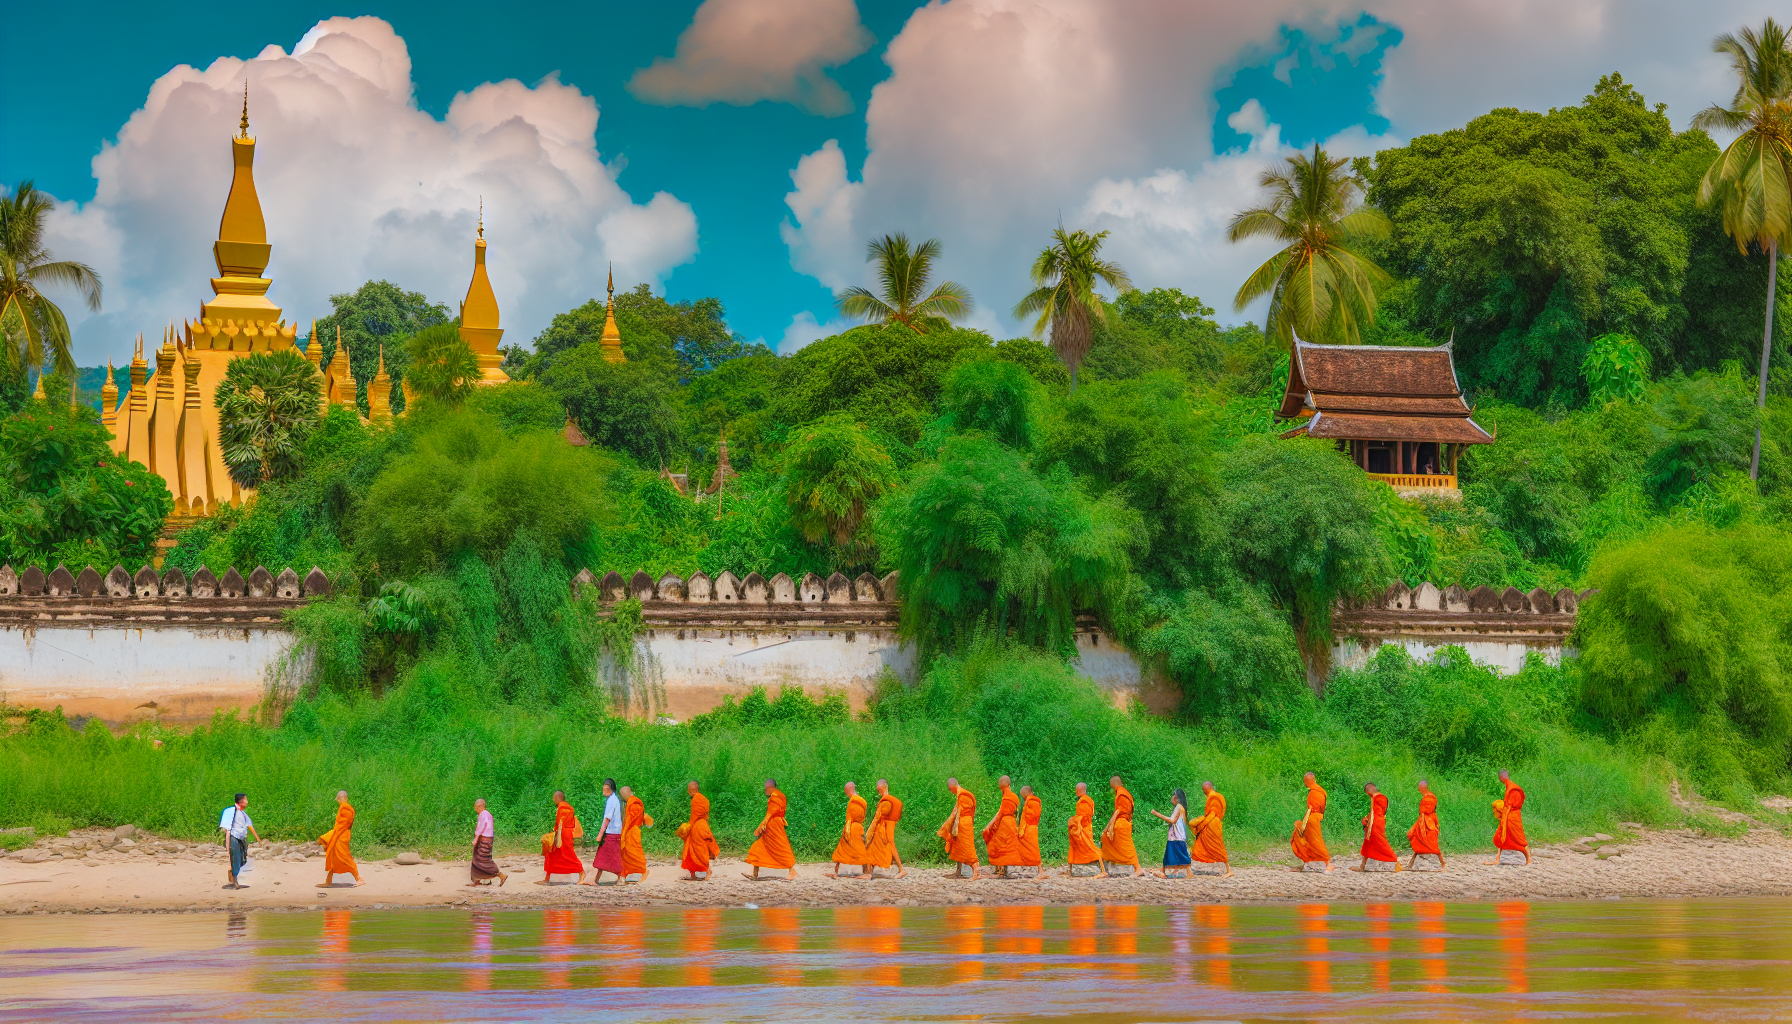 Buddhist monks walking near the Mekong River in Luang Prabang